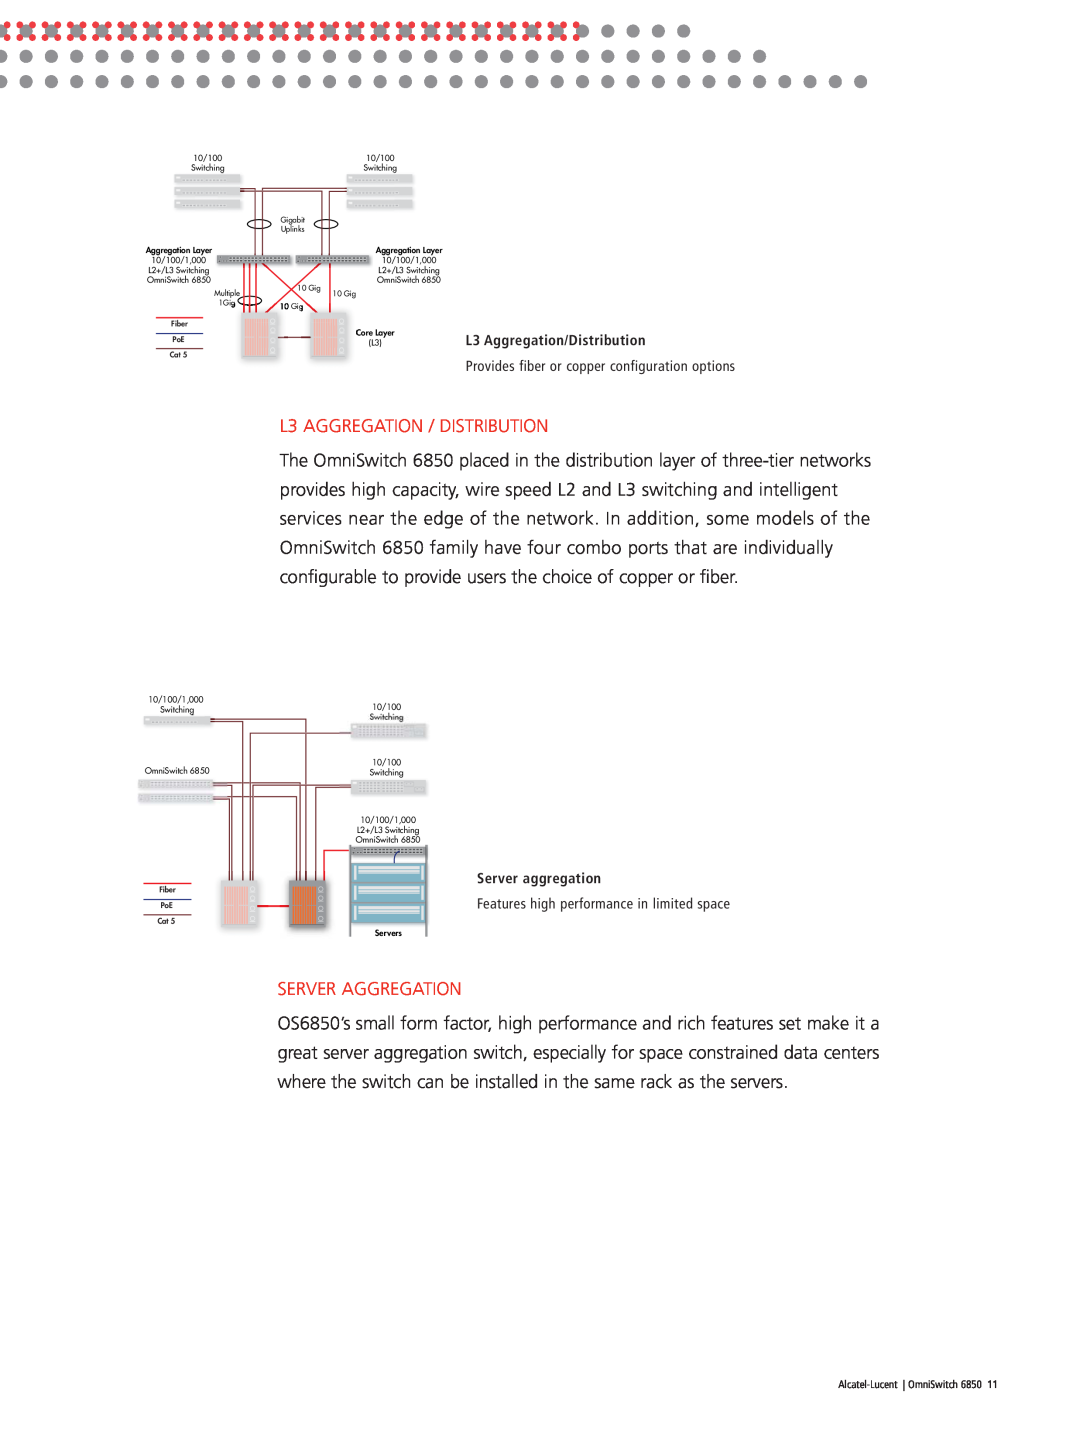 Riverstone Networks 6850 manual L3 AGGREGATION / DISTRIBUTION, Server Aggregation, L3L3 Aggregation/Distribution 